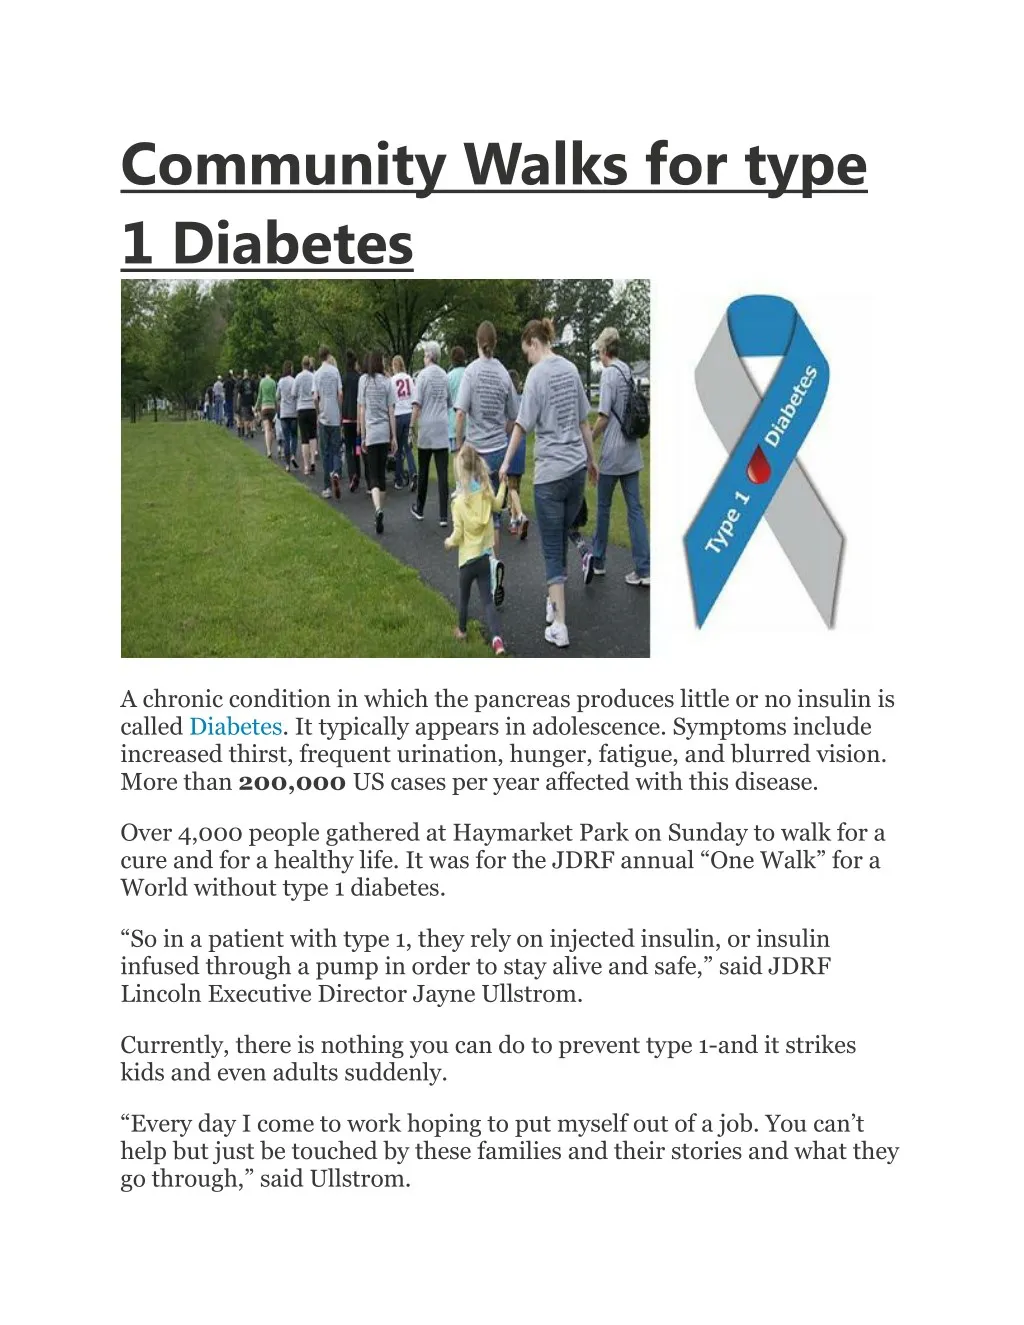 community walks for type 1 diabetes